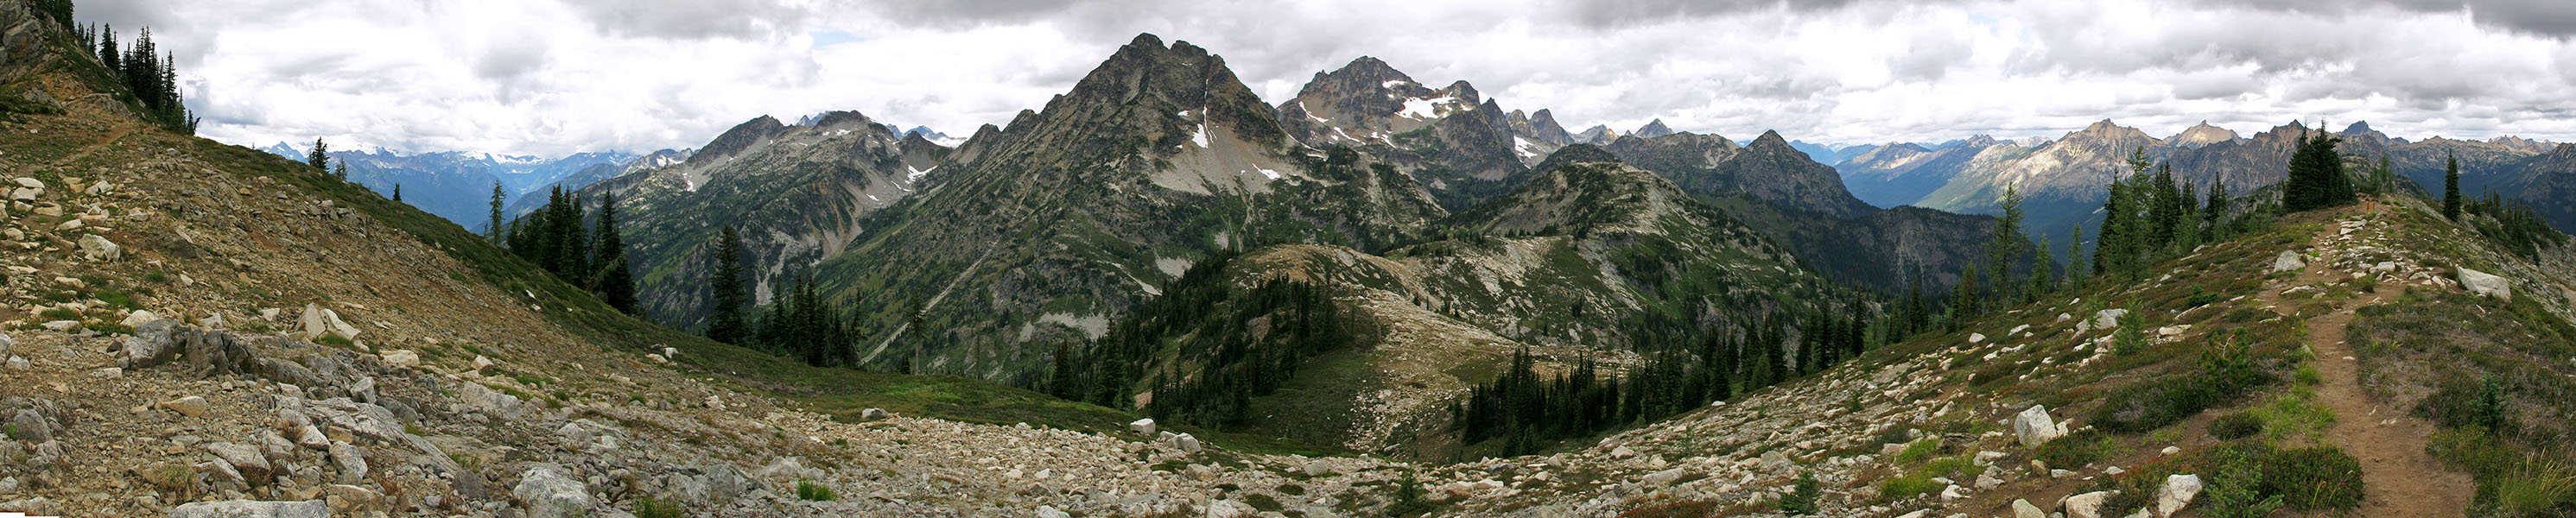 Maple Pass panorama [Maple Pass Trail, North Cascades National Park, Chelan County, Washington]